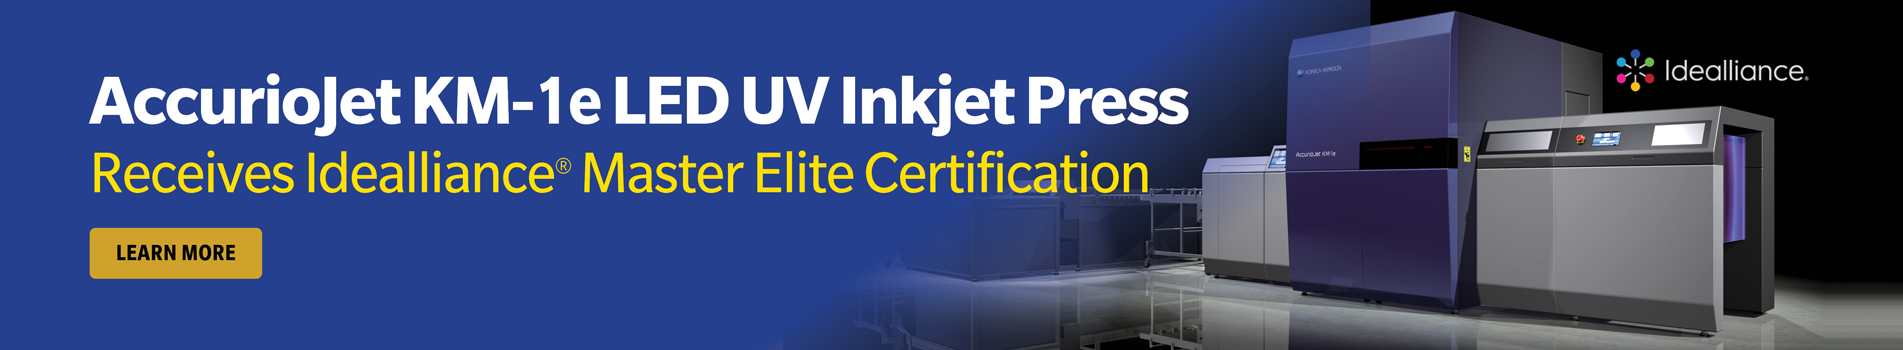 Accuriojet KM-1e LED UV Inkjet Press receives Idealliance Master Elite Certification